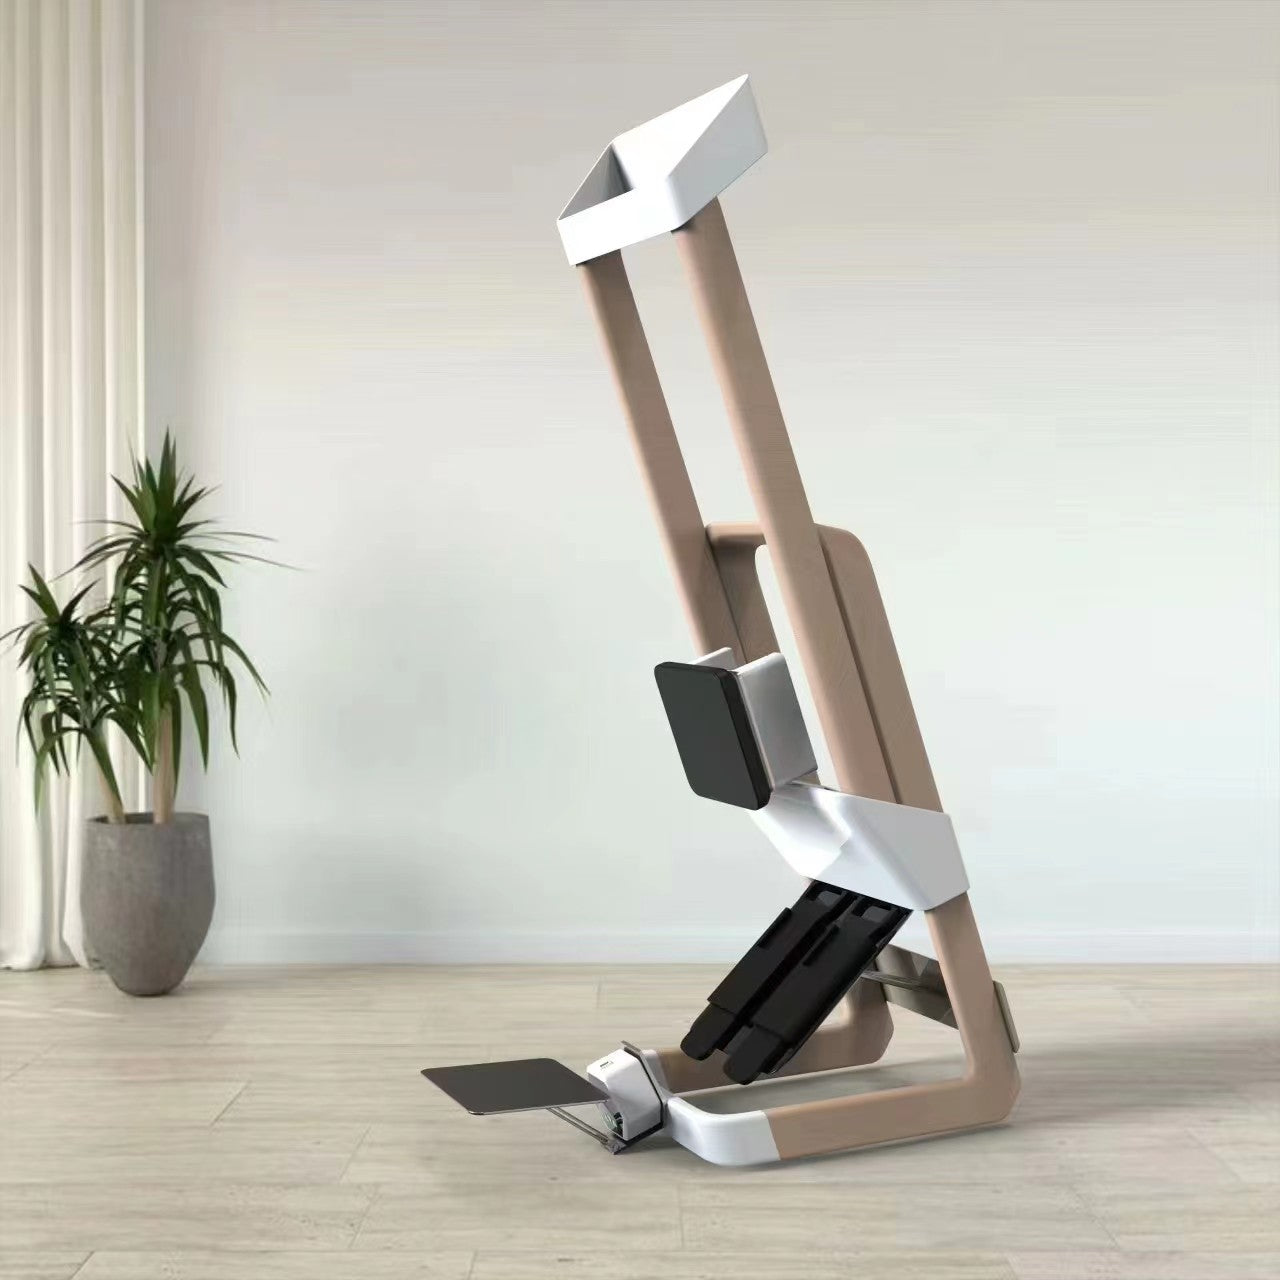 Vertical fitness equipment